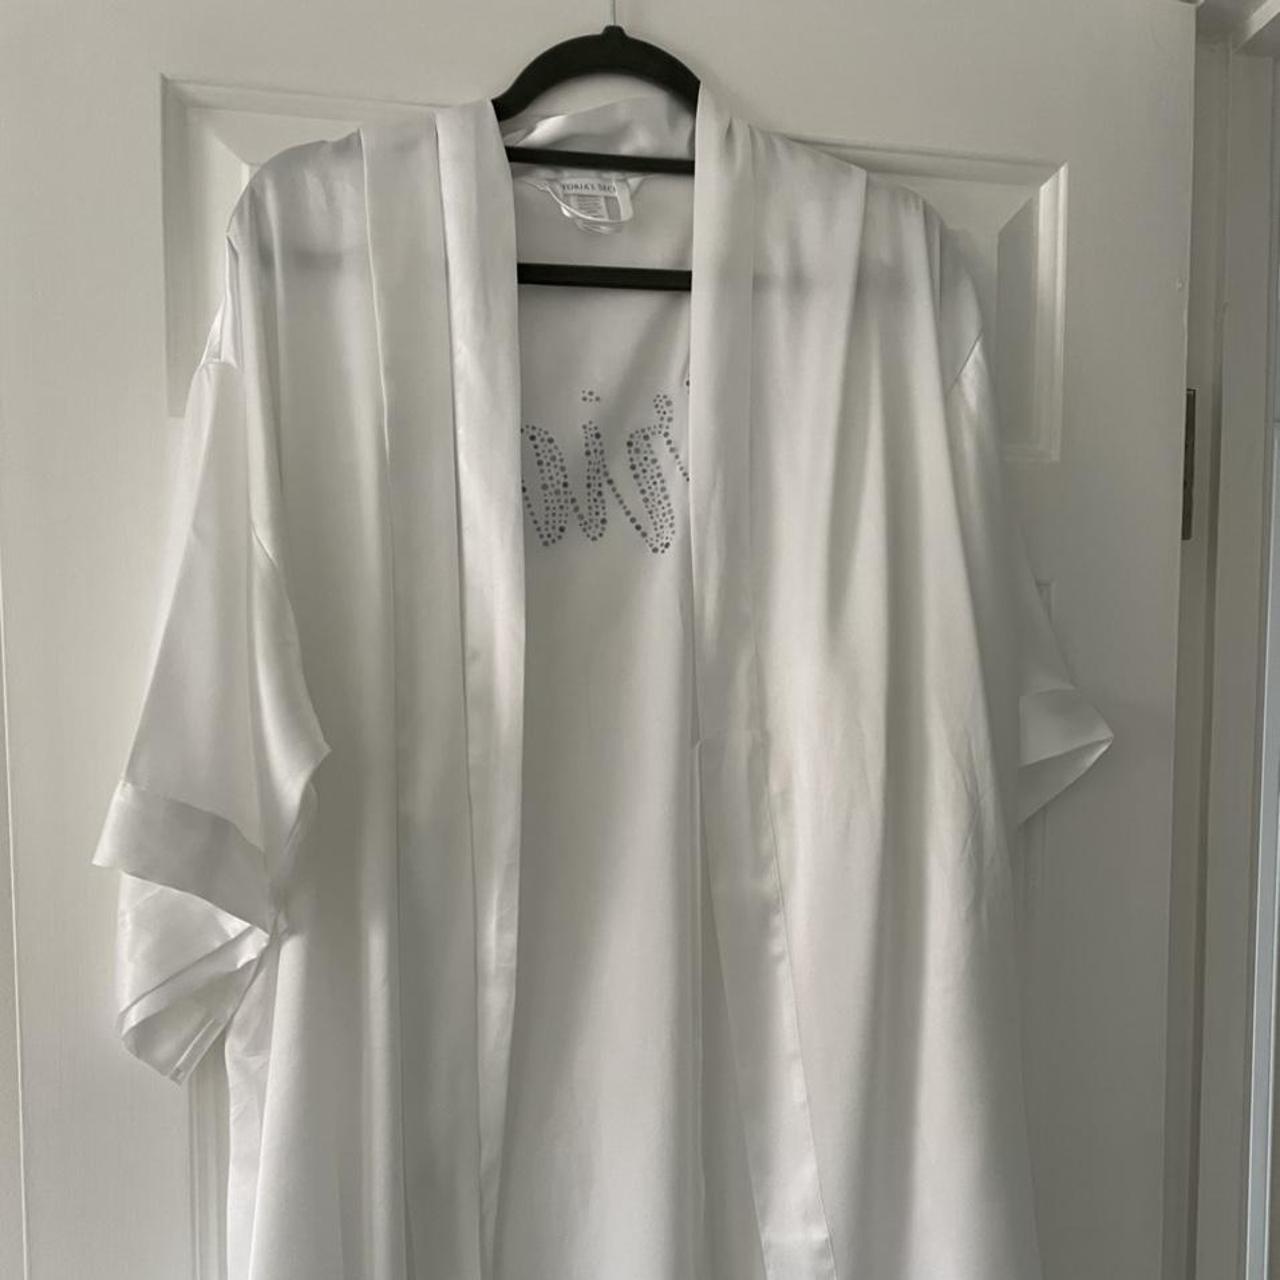 Product Image 2 - Victoria Secret bridal robe -